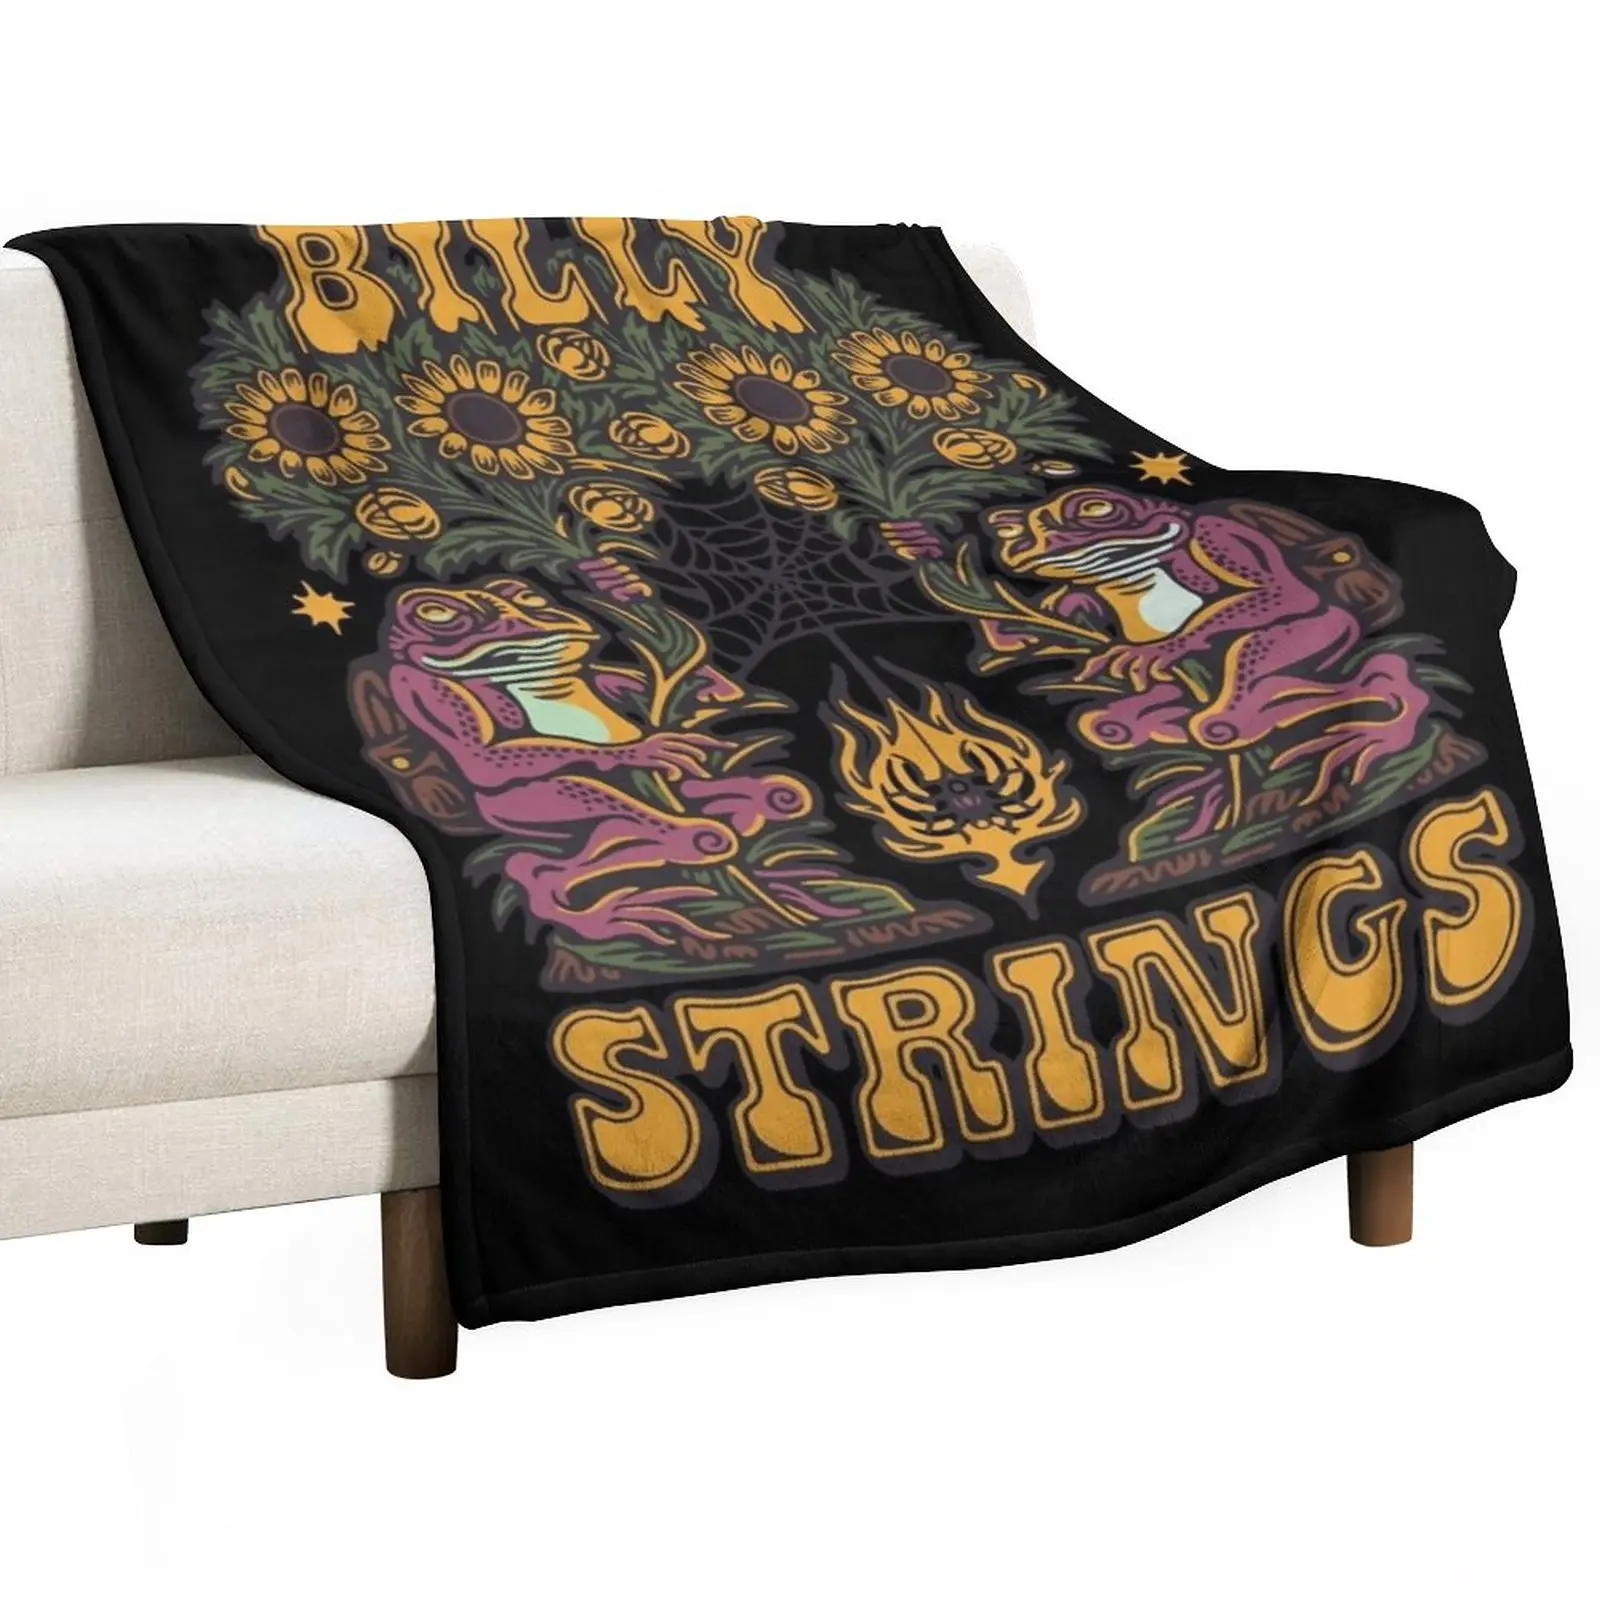 

Billy Strings Throw Blanket Decorative Bed Blankets Custom Blanket throw blanket for sofa Large Blanket